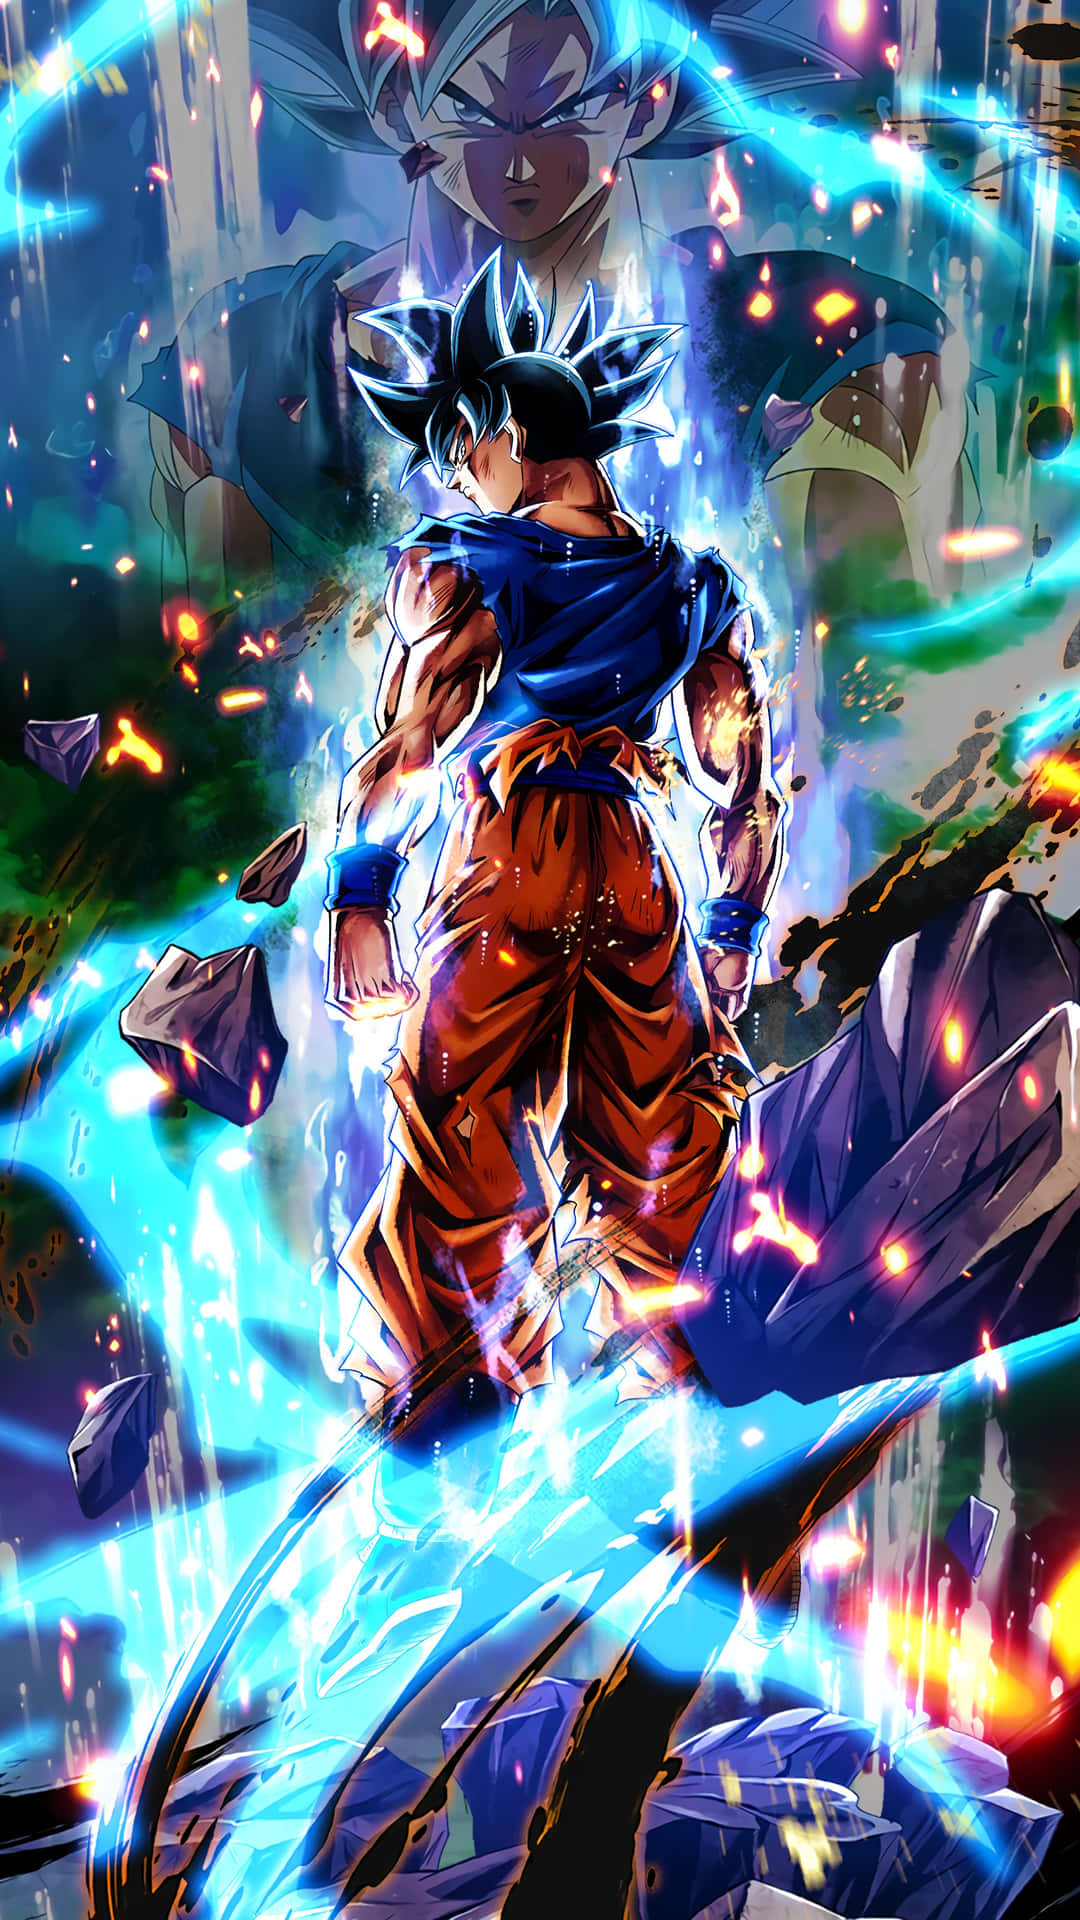 "Goku Achieves the Ultra Instinct Transformation"